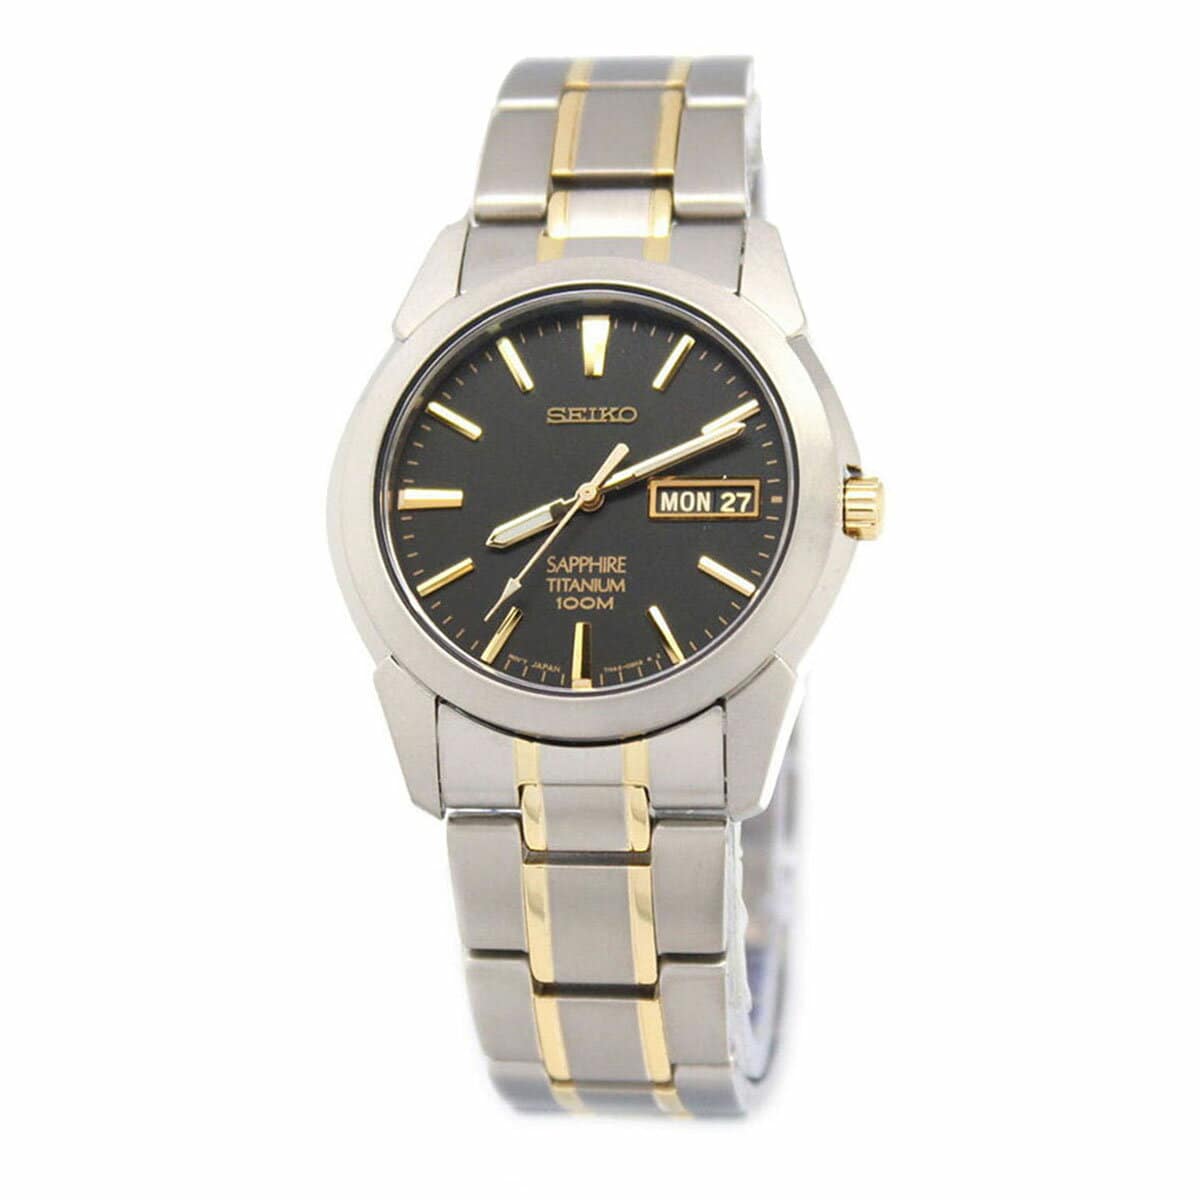 New]Seiko Men's Sapphire Titanium Watch SGG735P1 - BE FORWARD Store